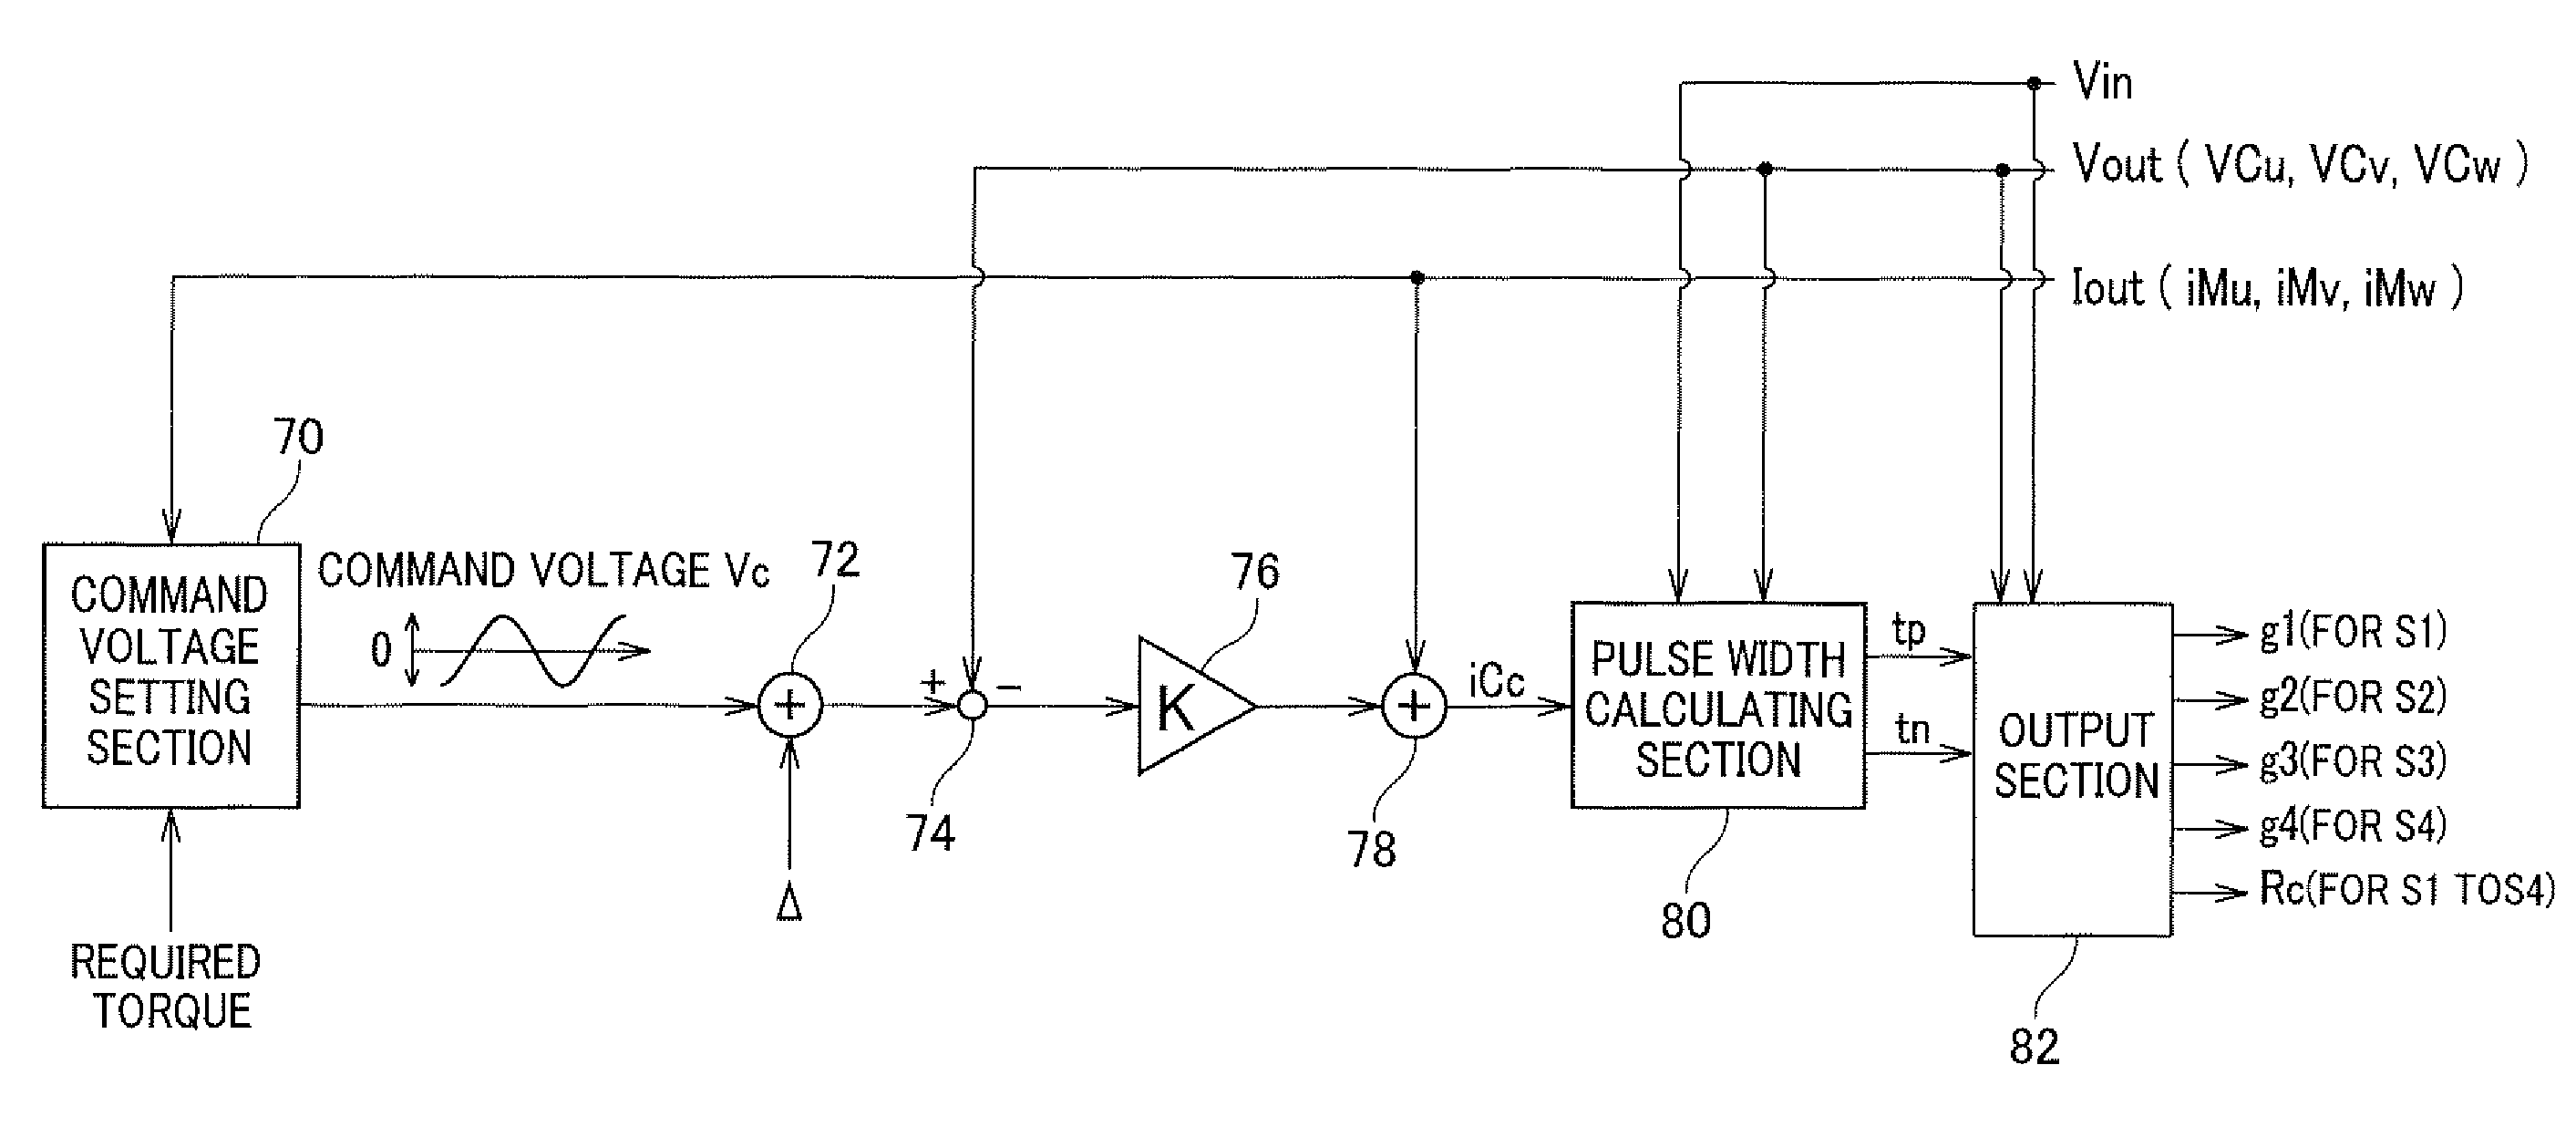 Control apparatus for controlling power conversion apparatus